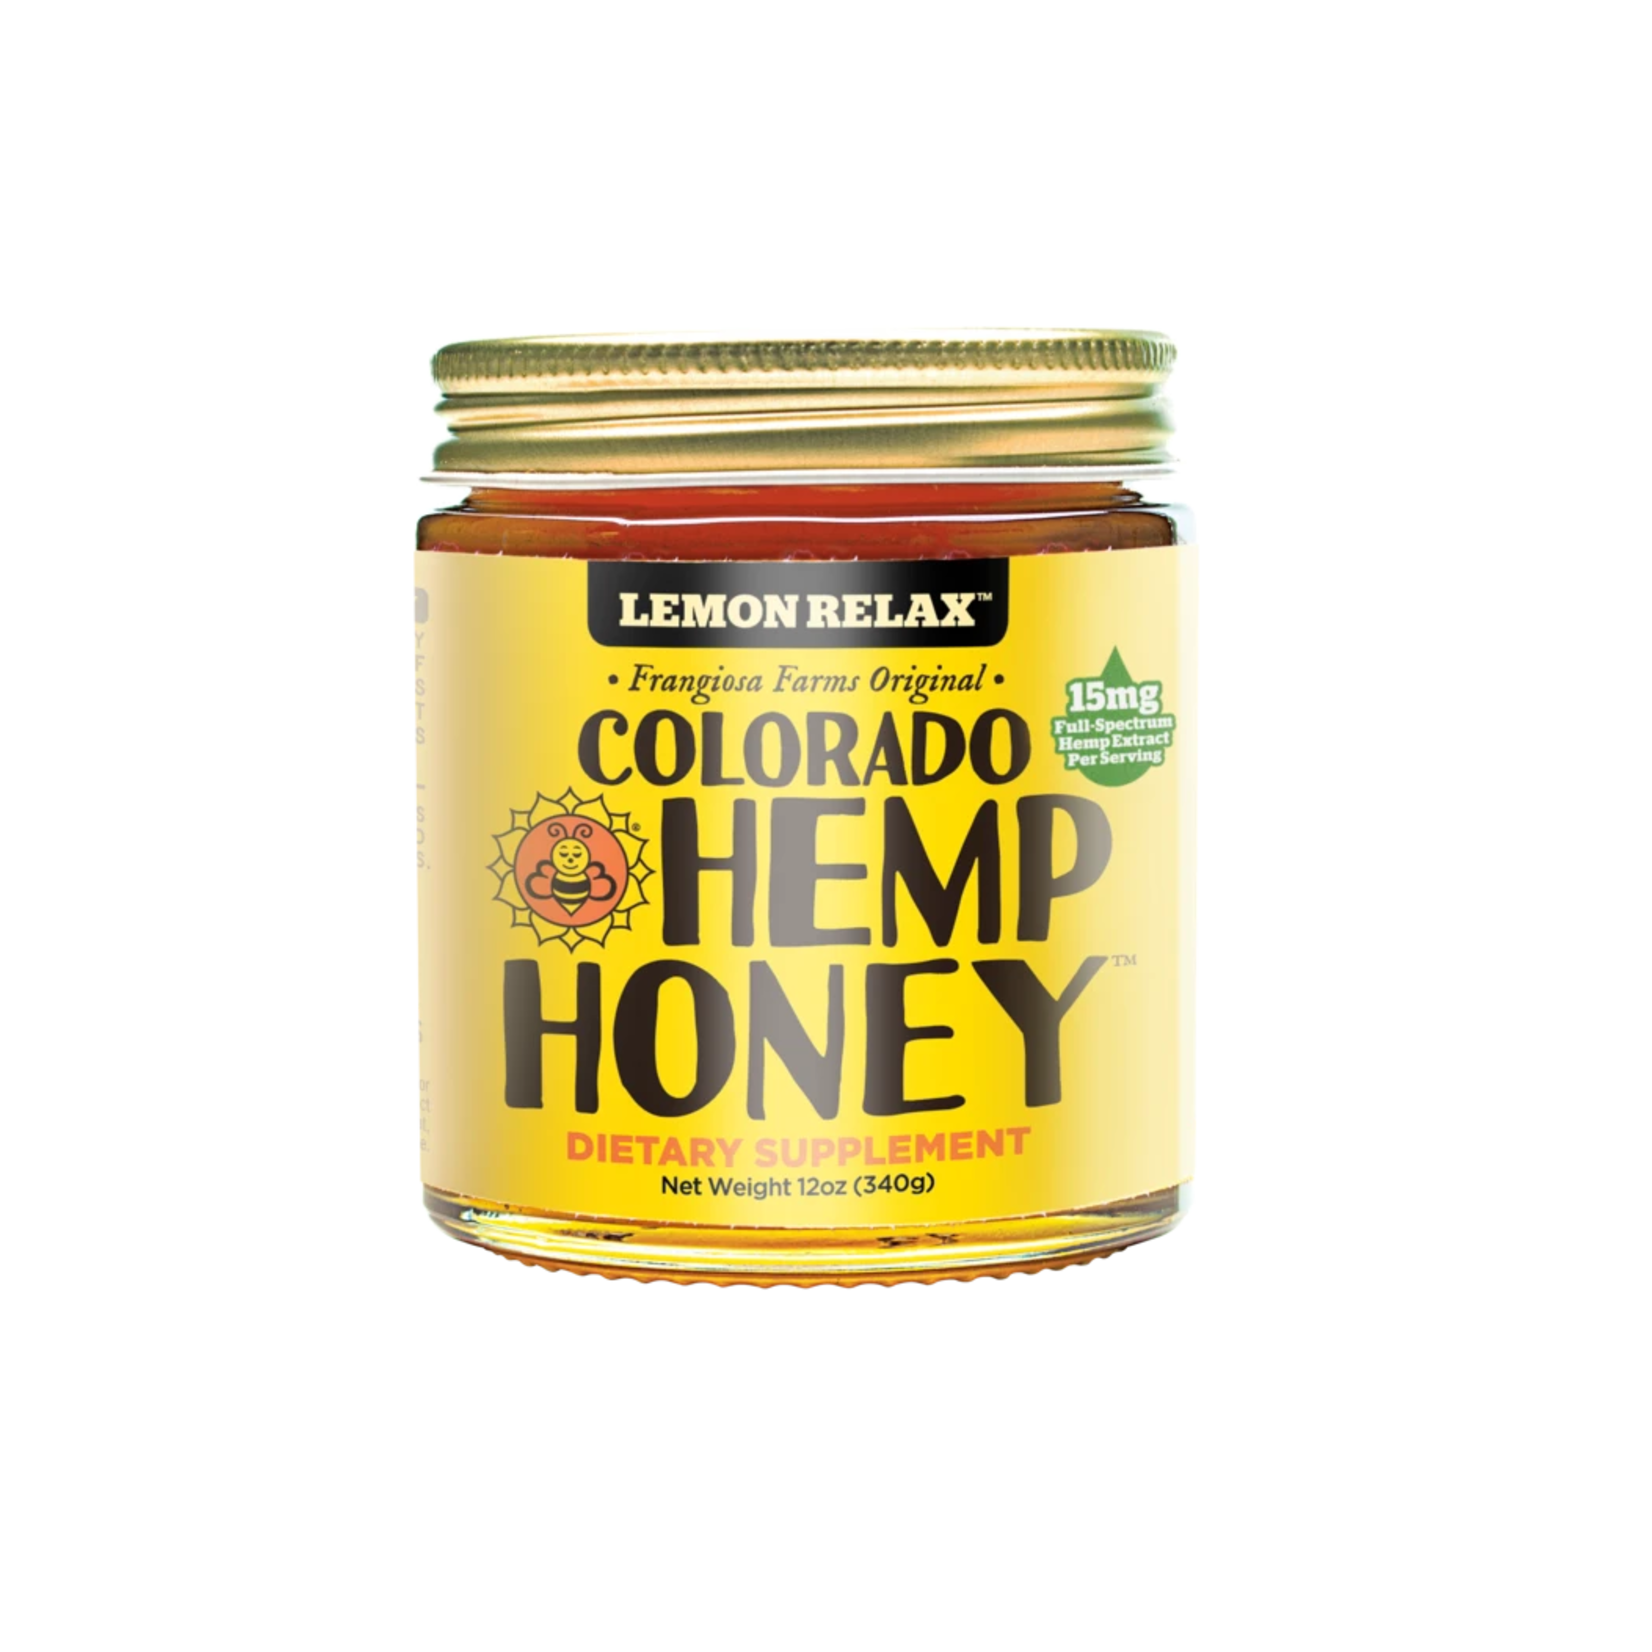 Colorado Hemp Honey Colorado Hemp Honey Lemon Relax Dietary Supplement